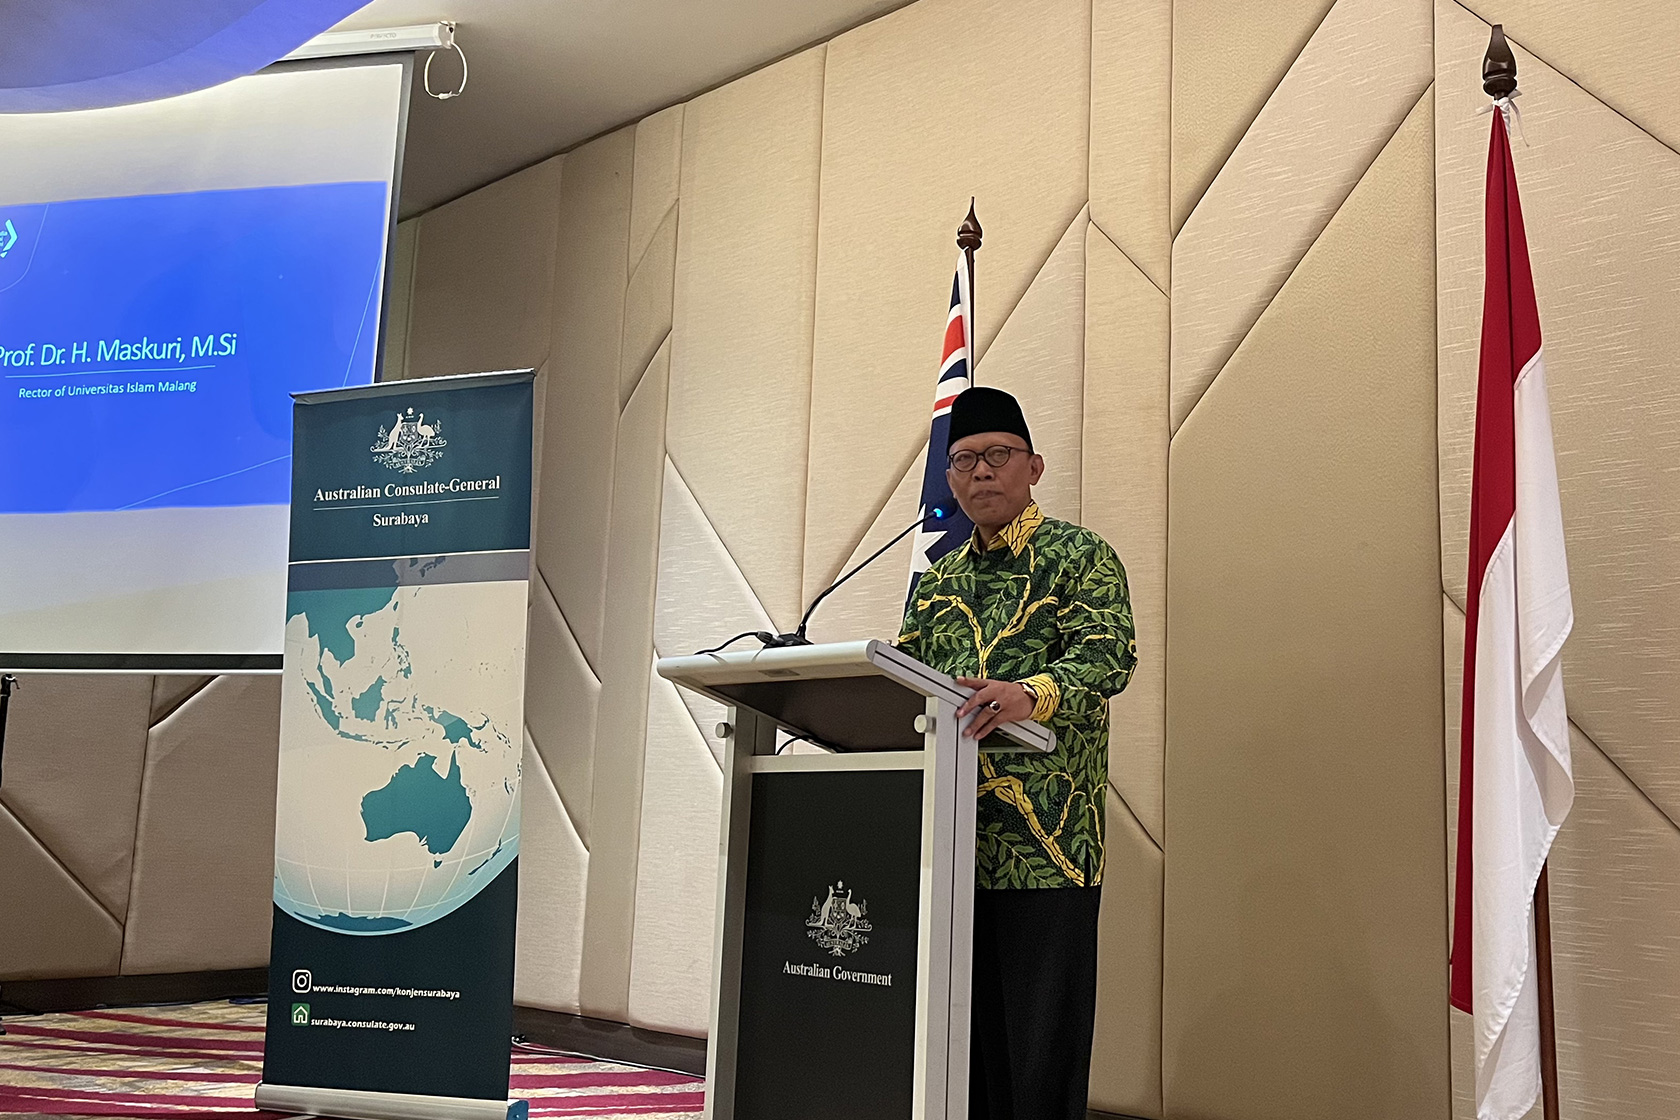 Prof Dr H. Maskuri, MSi, an esteemed Australian alumnus and Rector of Universitas Islam Malang (UNISMA), delivers enlightening religious reflections (kultum).